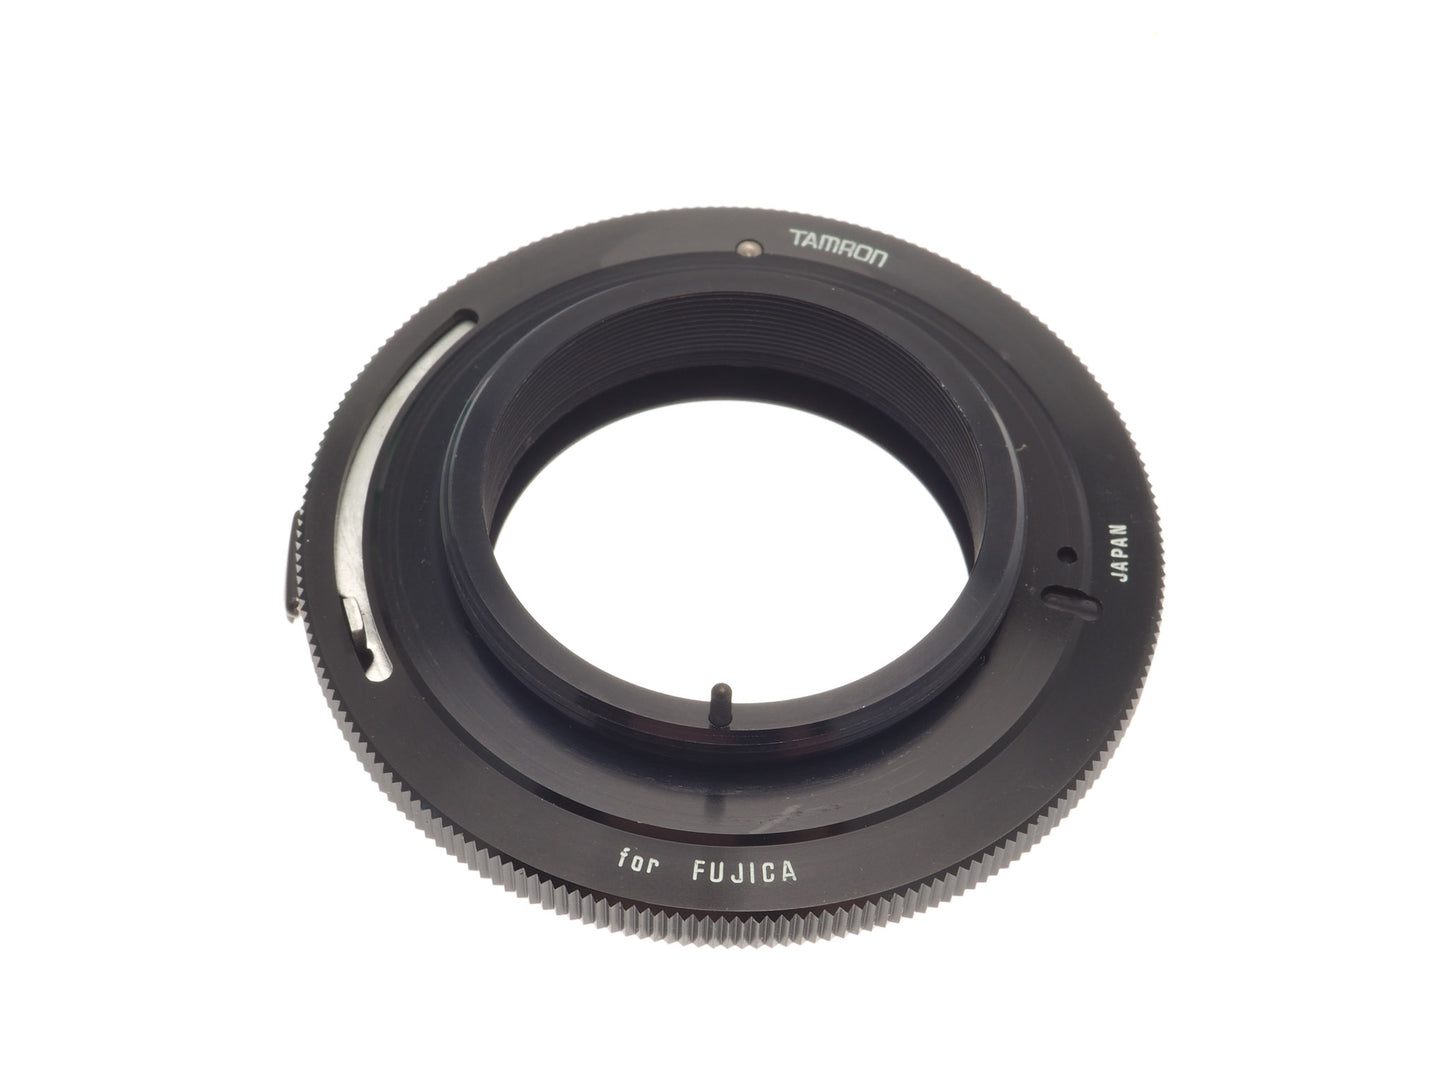 Tamron Adaptall - Fujica (M42) Adapter - Lens Adapter